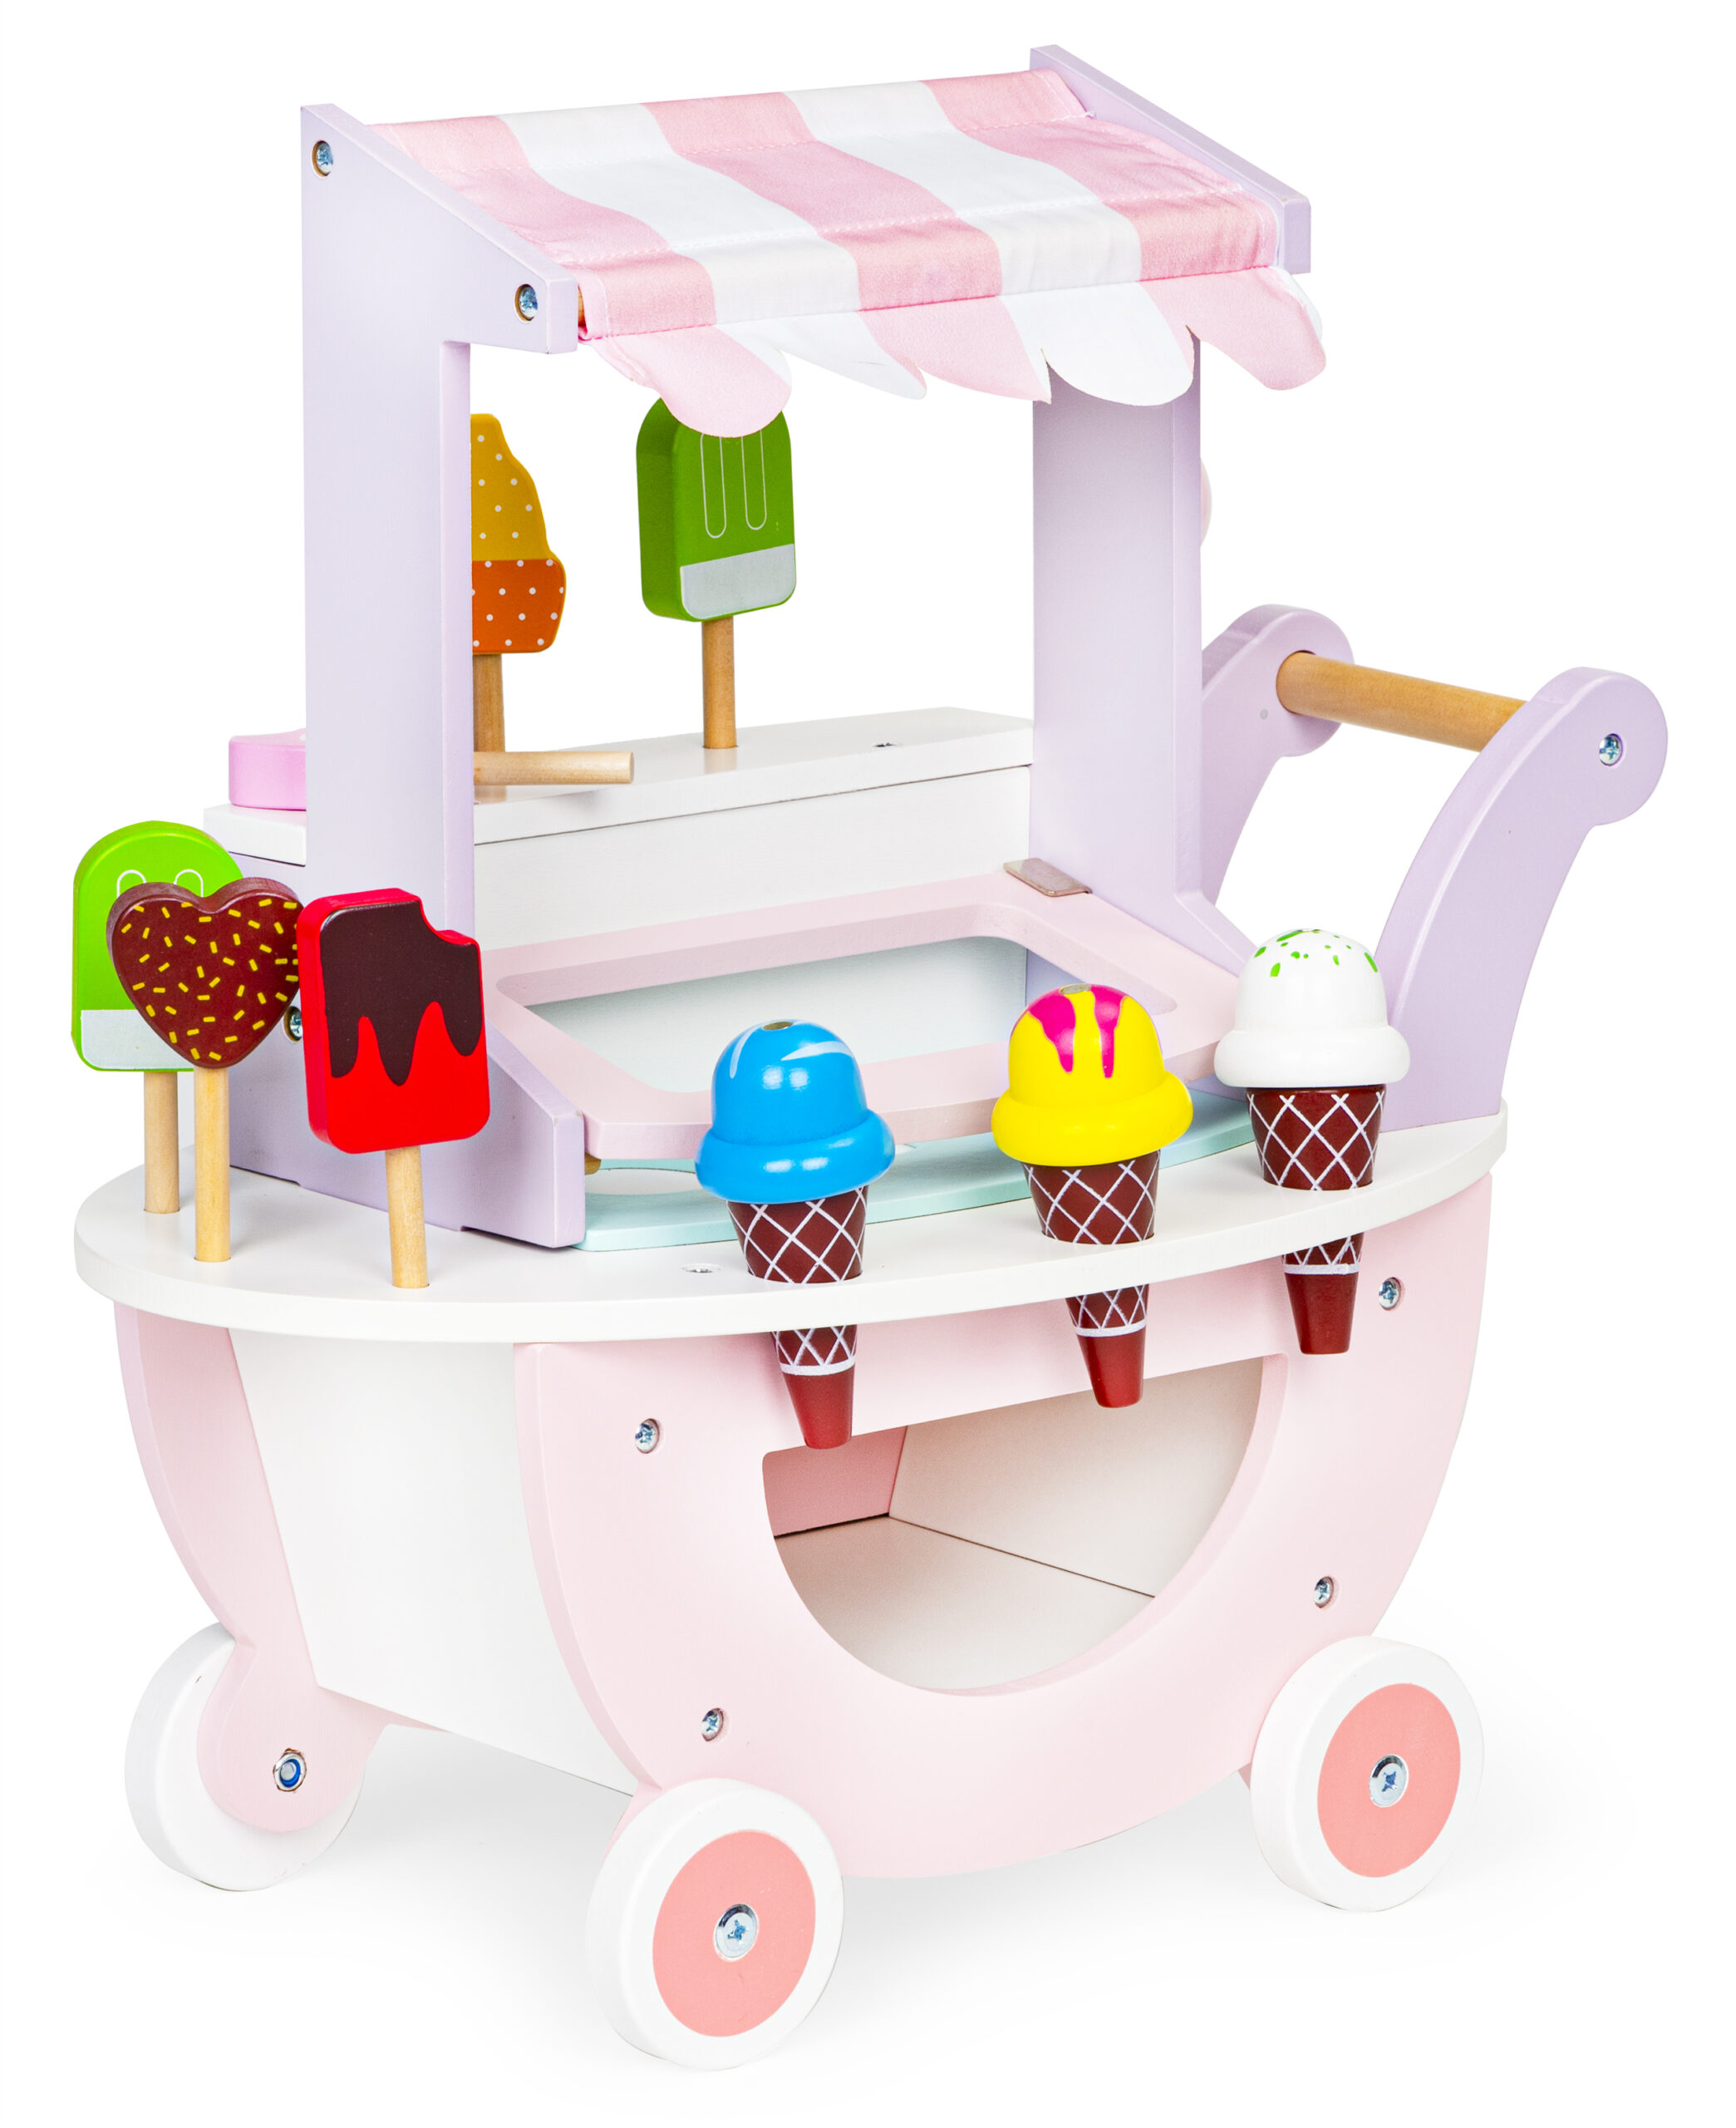 Antepremergator Interactiv din lemn natural, „LikeSmart Ice Cream Kart 89015” functie educativa si interactiva pentru copii, 41×23.5×44 cm